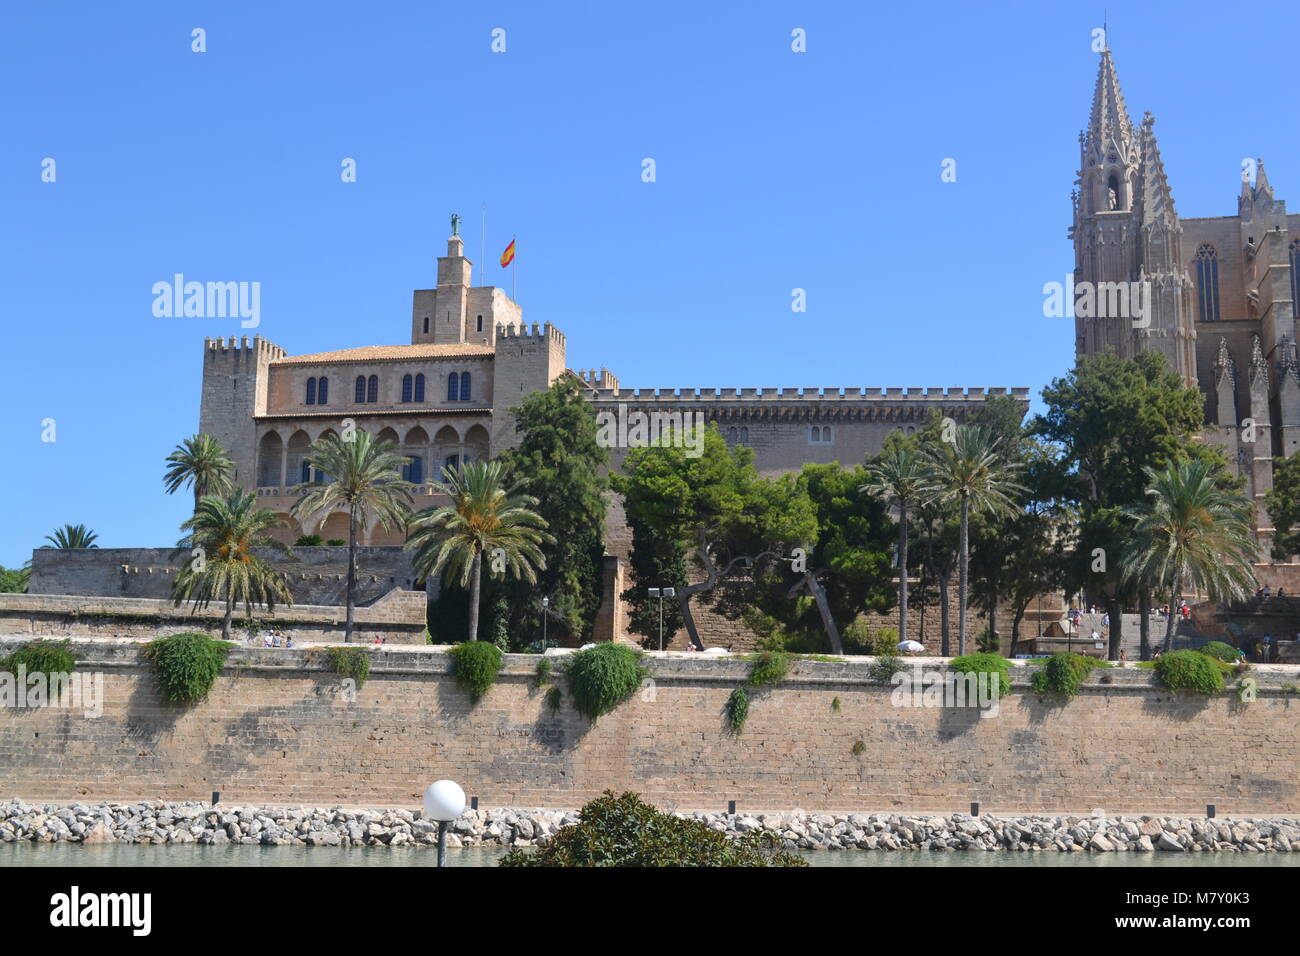 "palma" "palma nova" "palma cathedral" "spain" "Balearic islands" "Majorca" "palma harbour" "scenery". Stock Photo